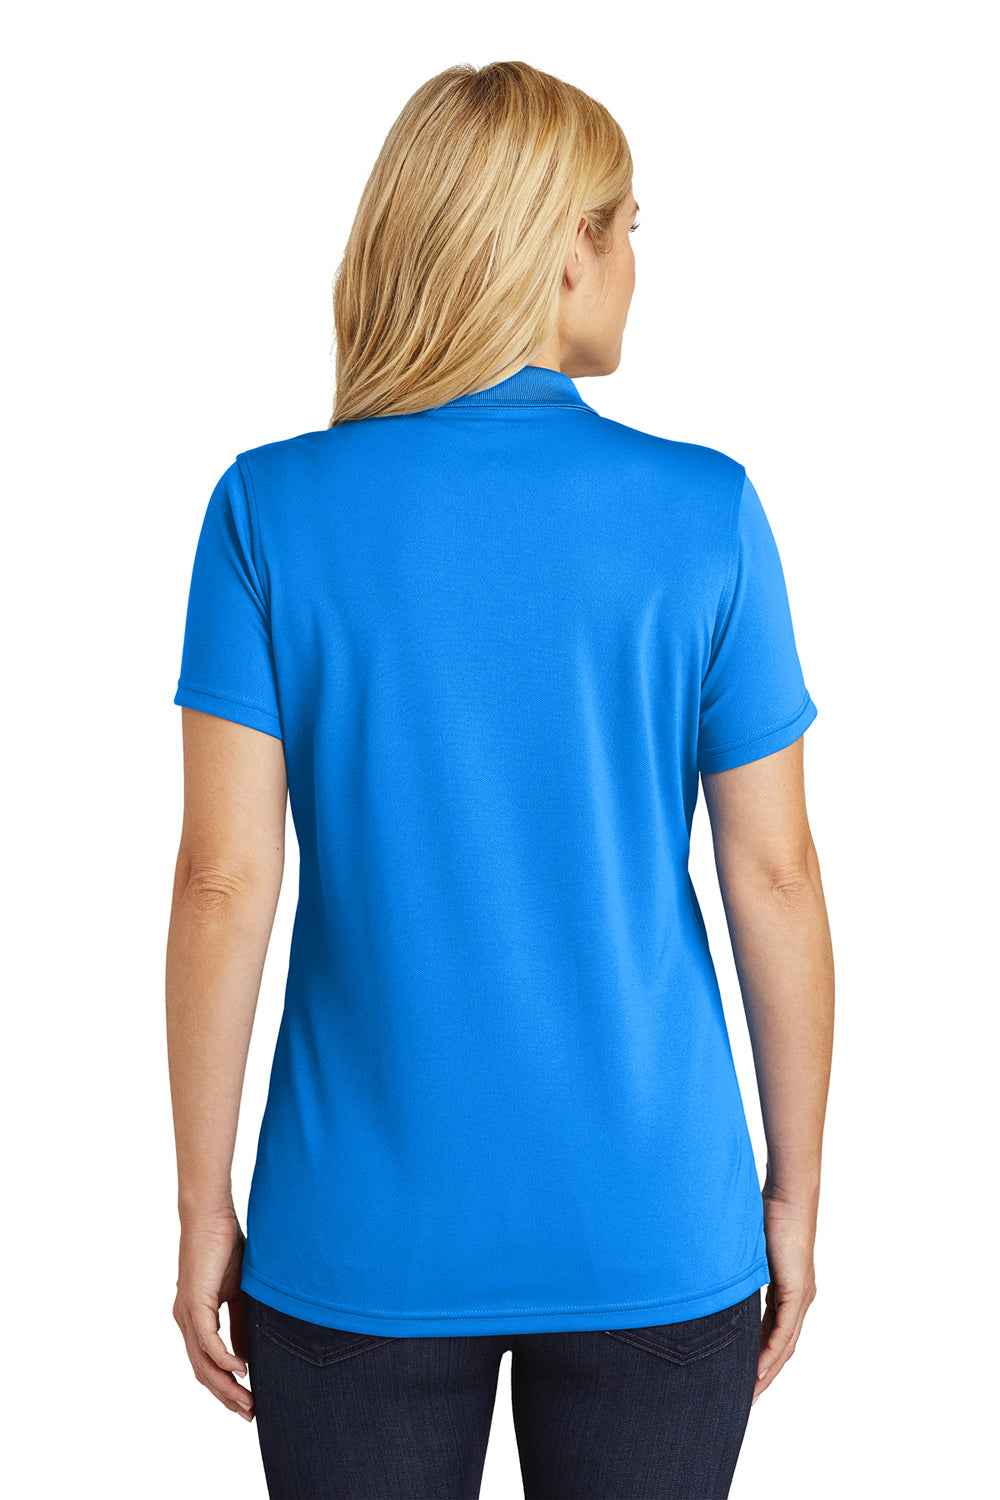 Port Authority LK110 Womens Dry Zone Moisture Wicking Short Sleeve Polo Shirt Coastal Blue Back